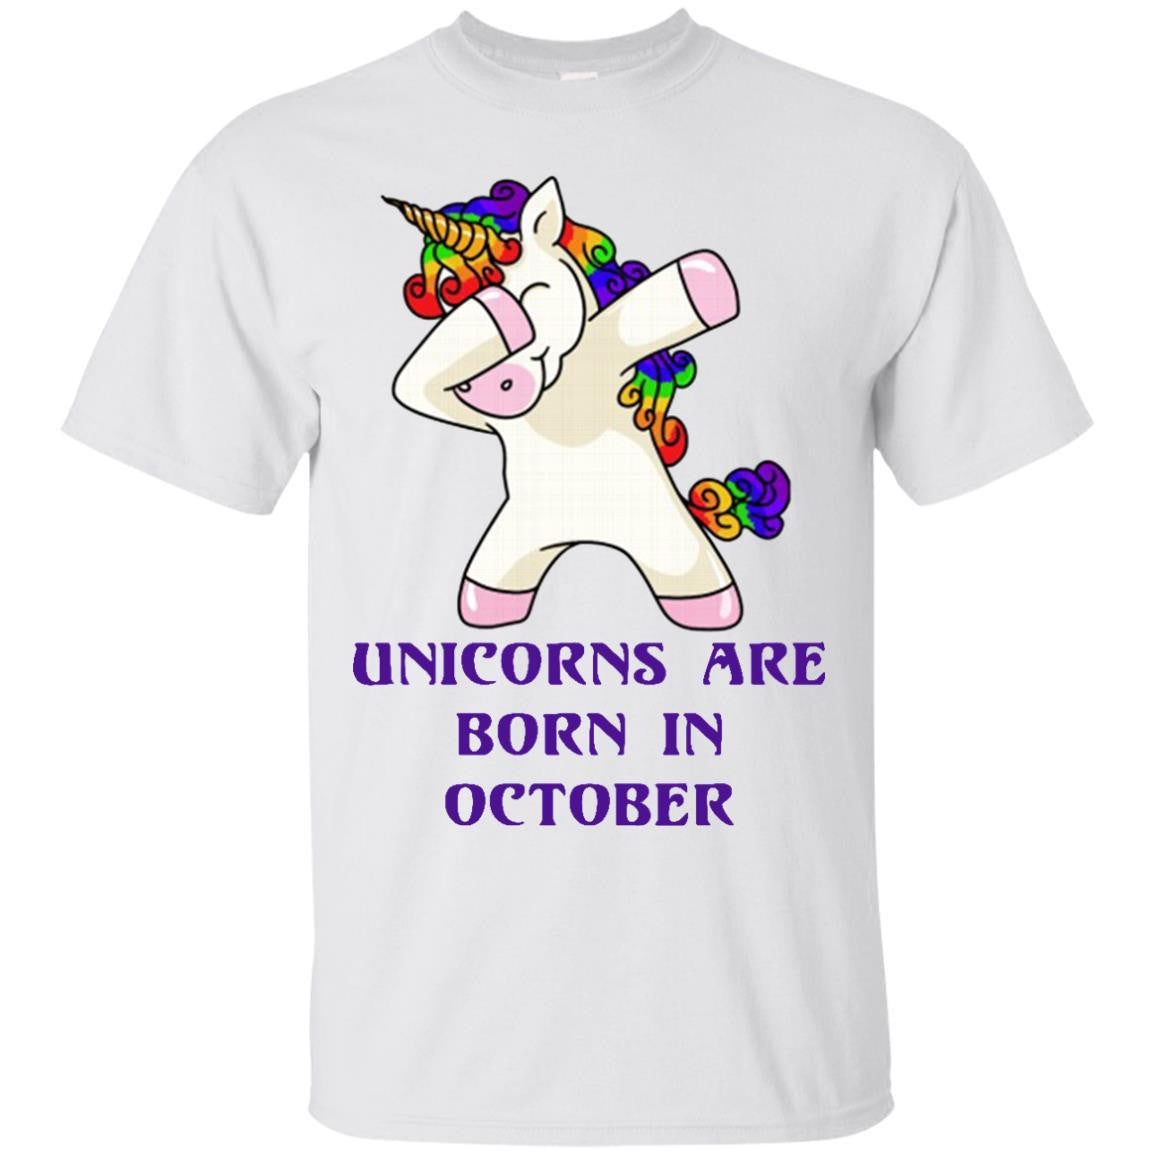 Dabbing Unicorns are Born in October shirt, tank top, racerback